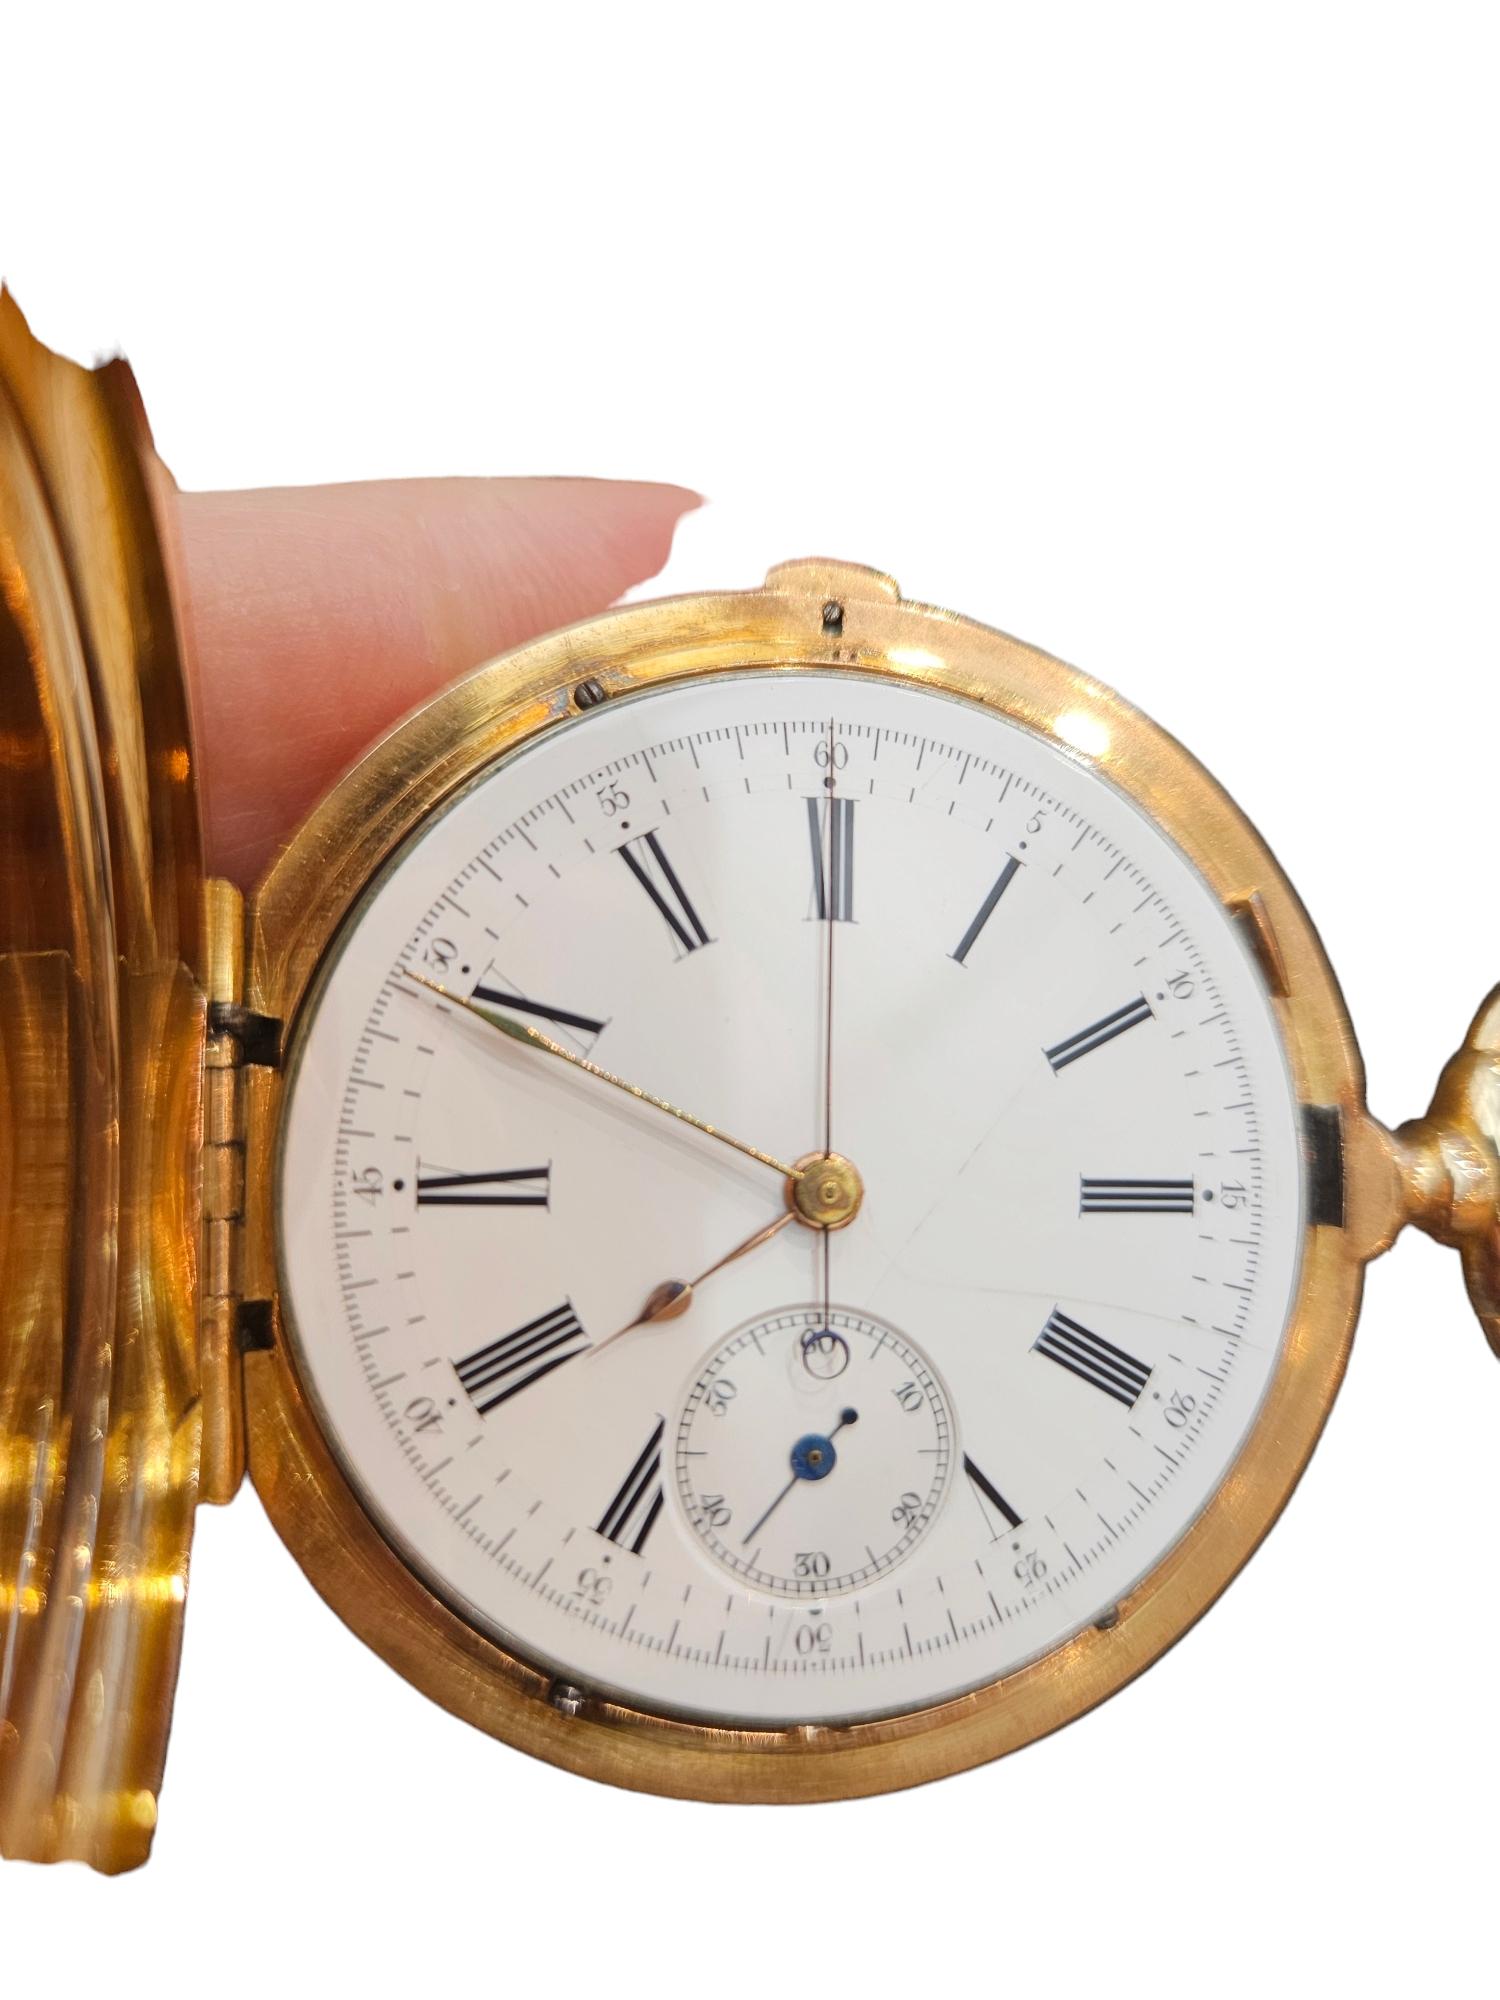 Vacheron Constantin Hunter Case Pocket Watch 1 Botton Chronograph 18kt Pink Gold For Sale 9